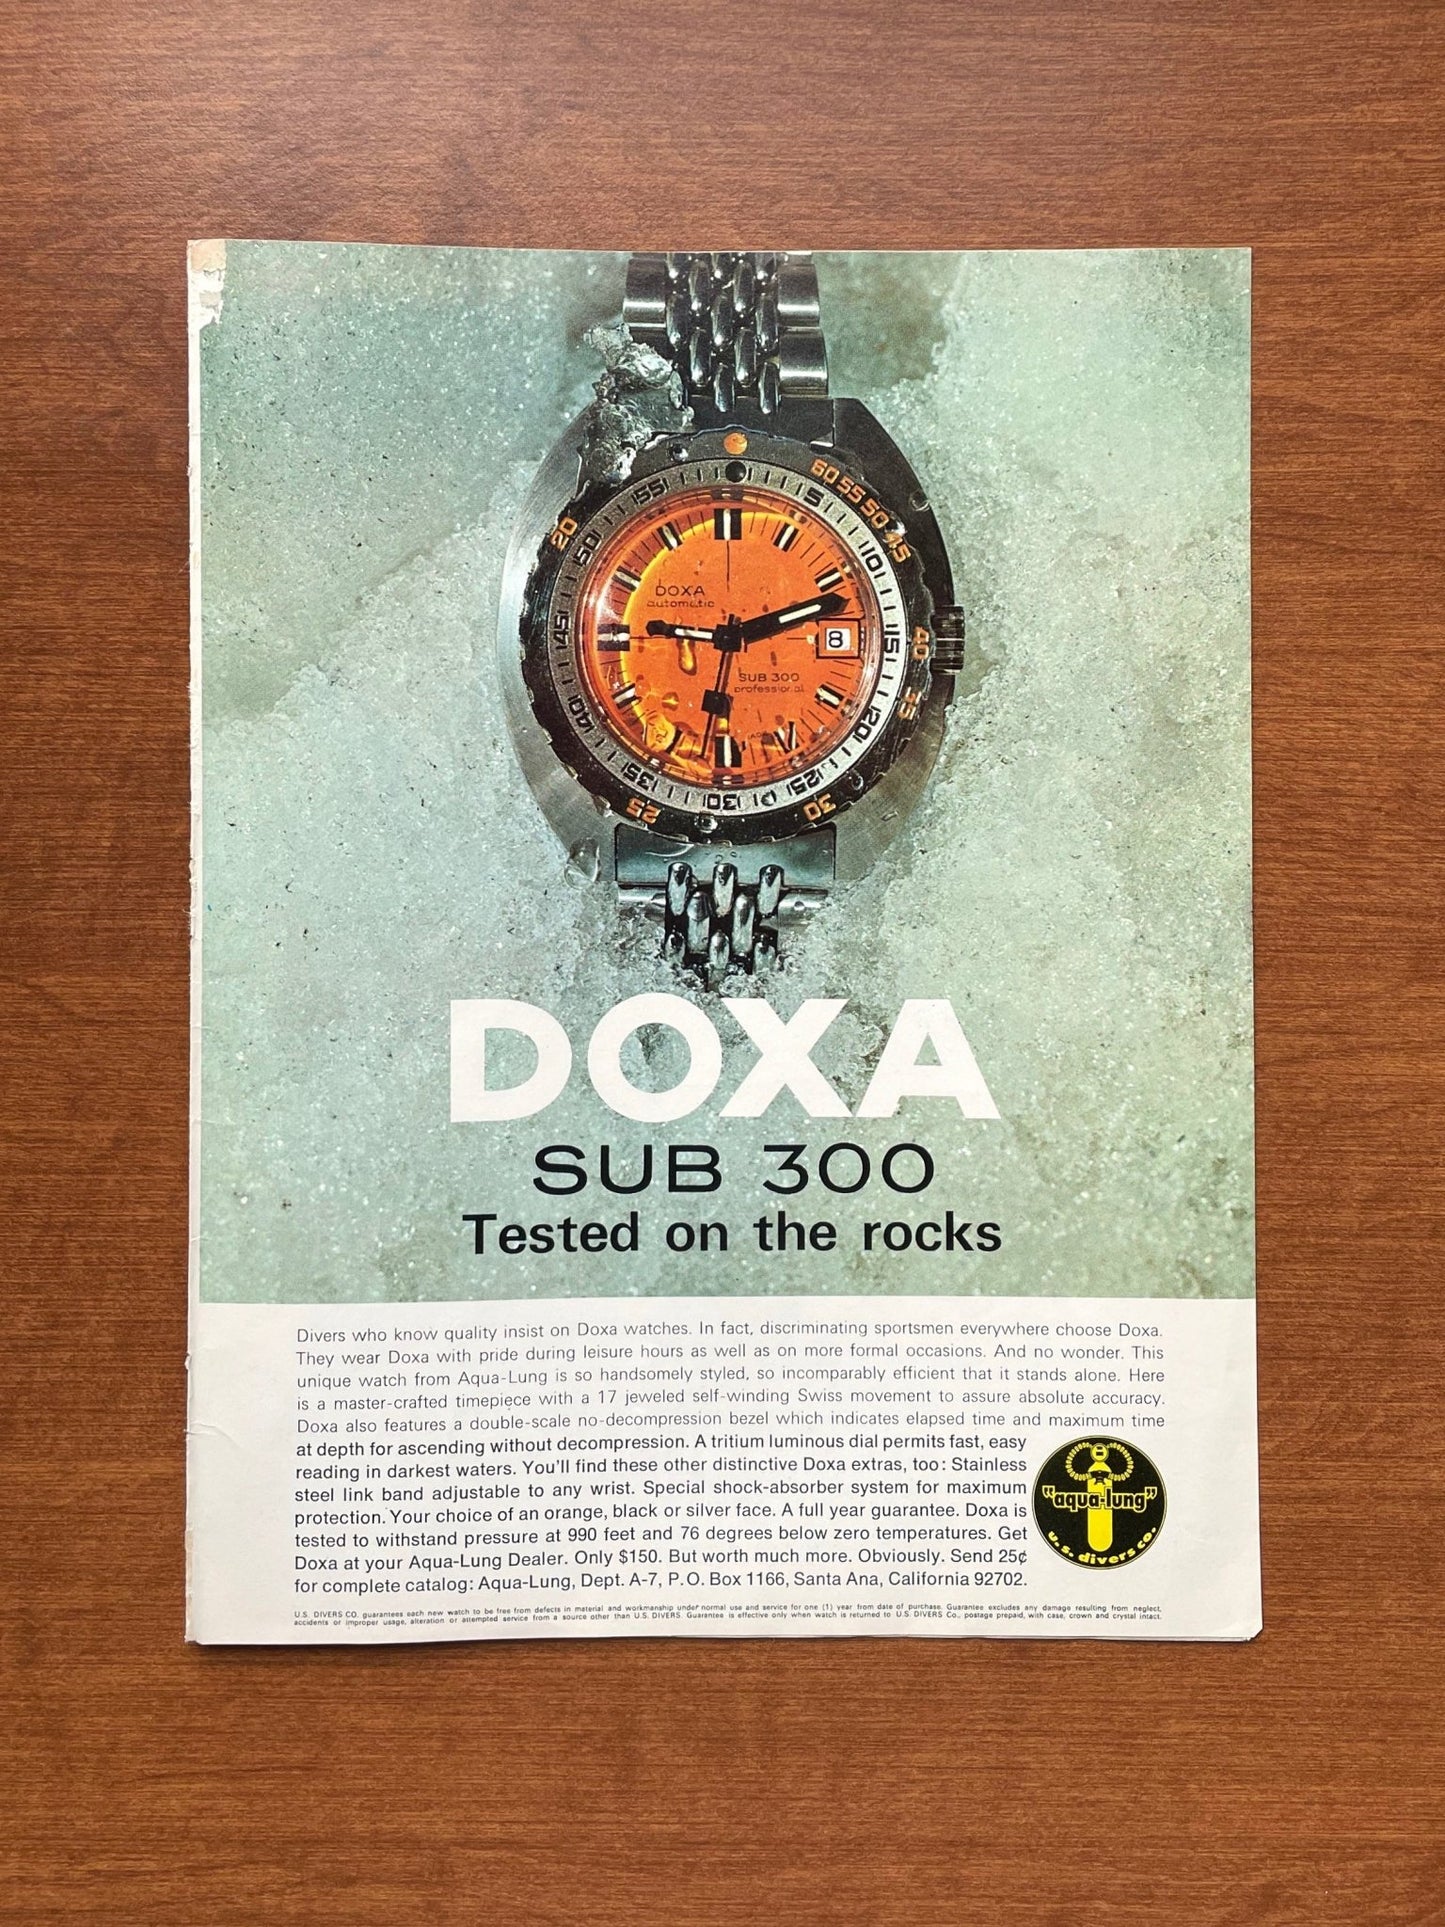 1968 Doxa SUB 300 "Tested on the rocks" Advertisement